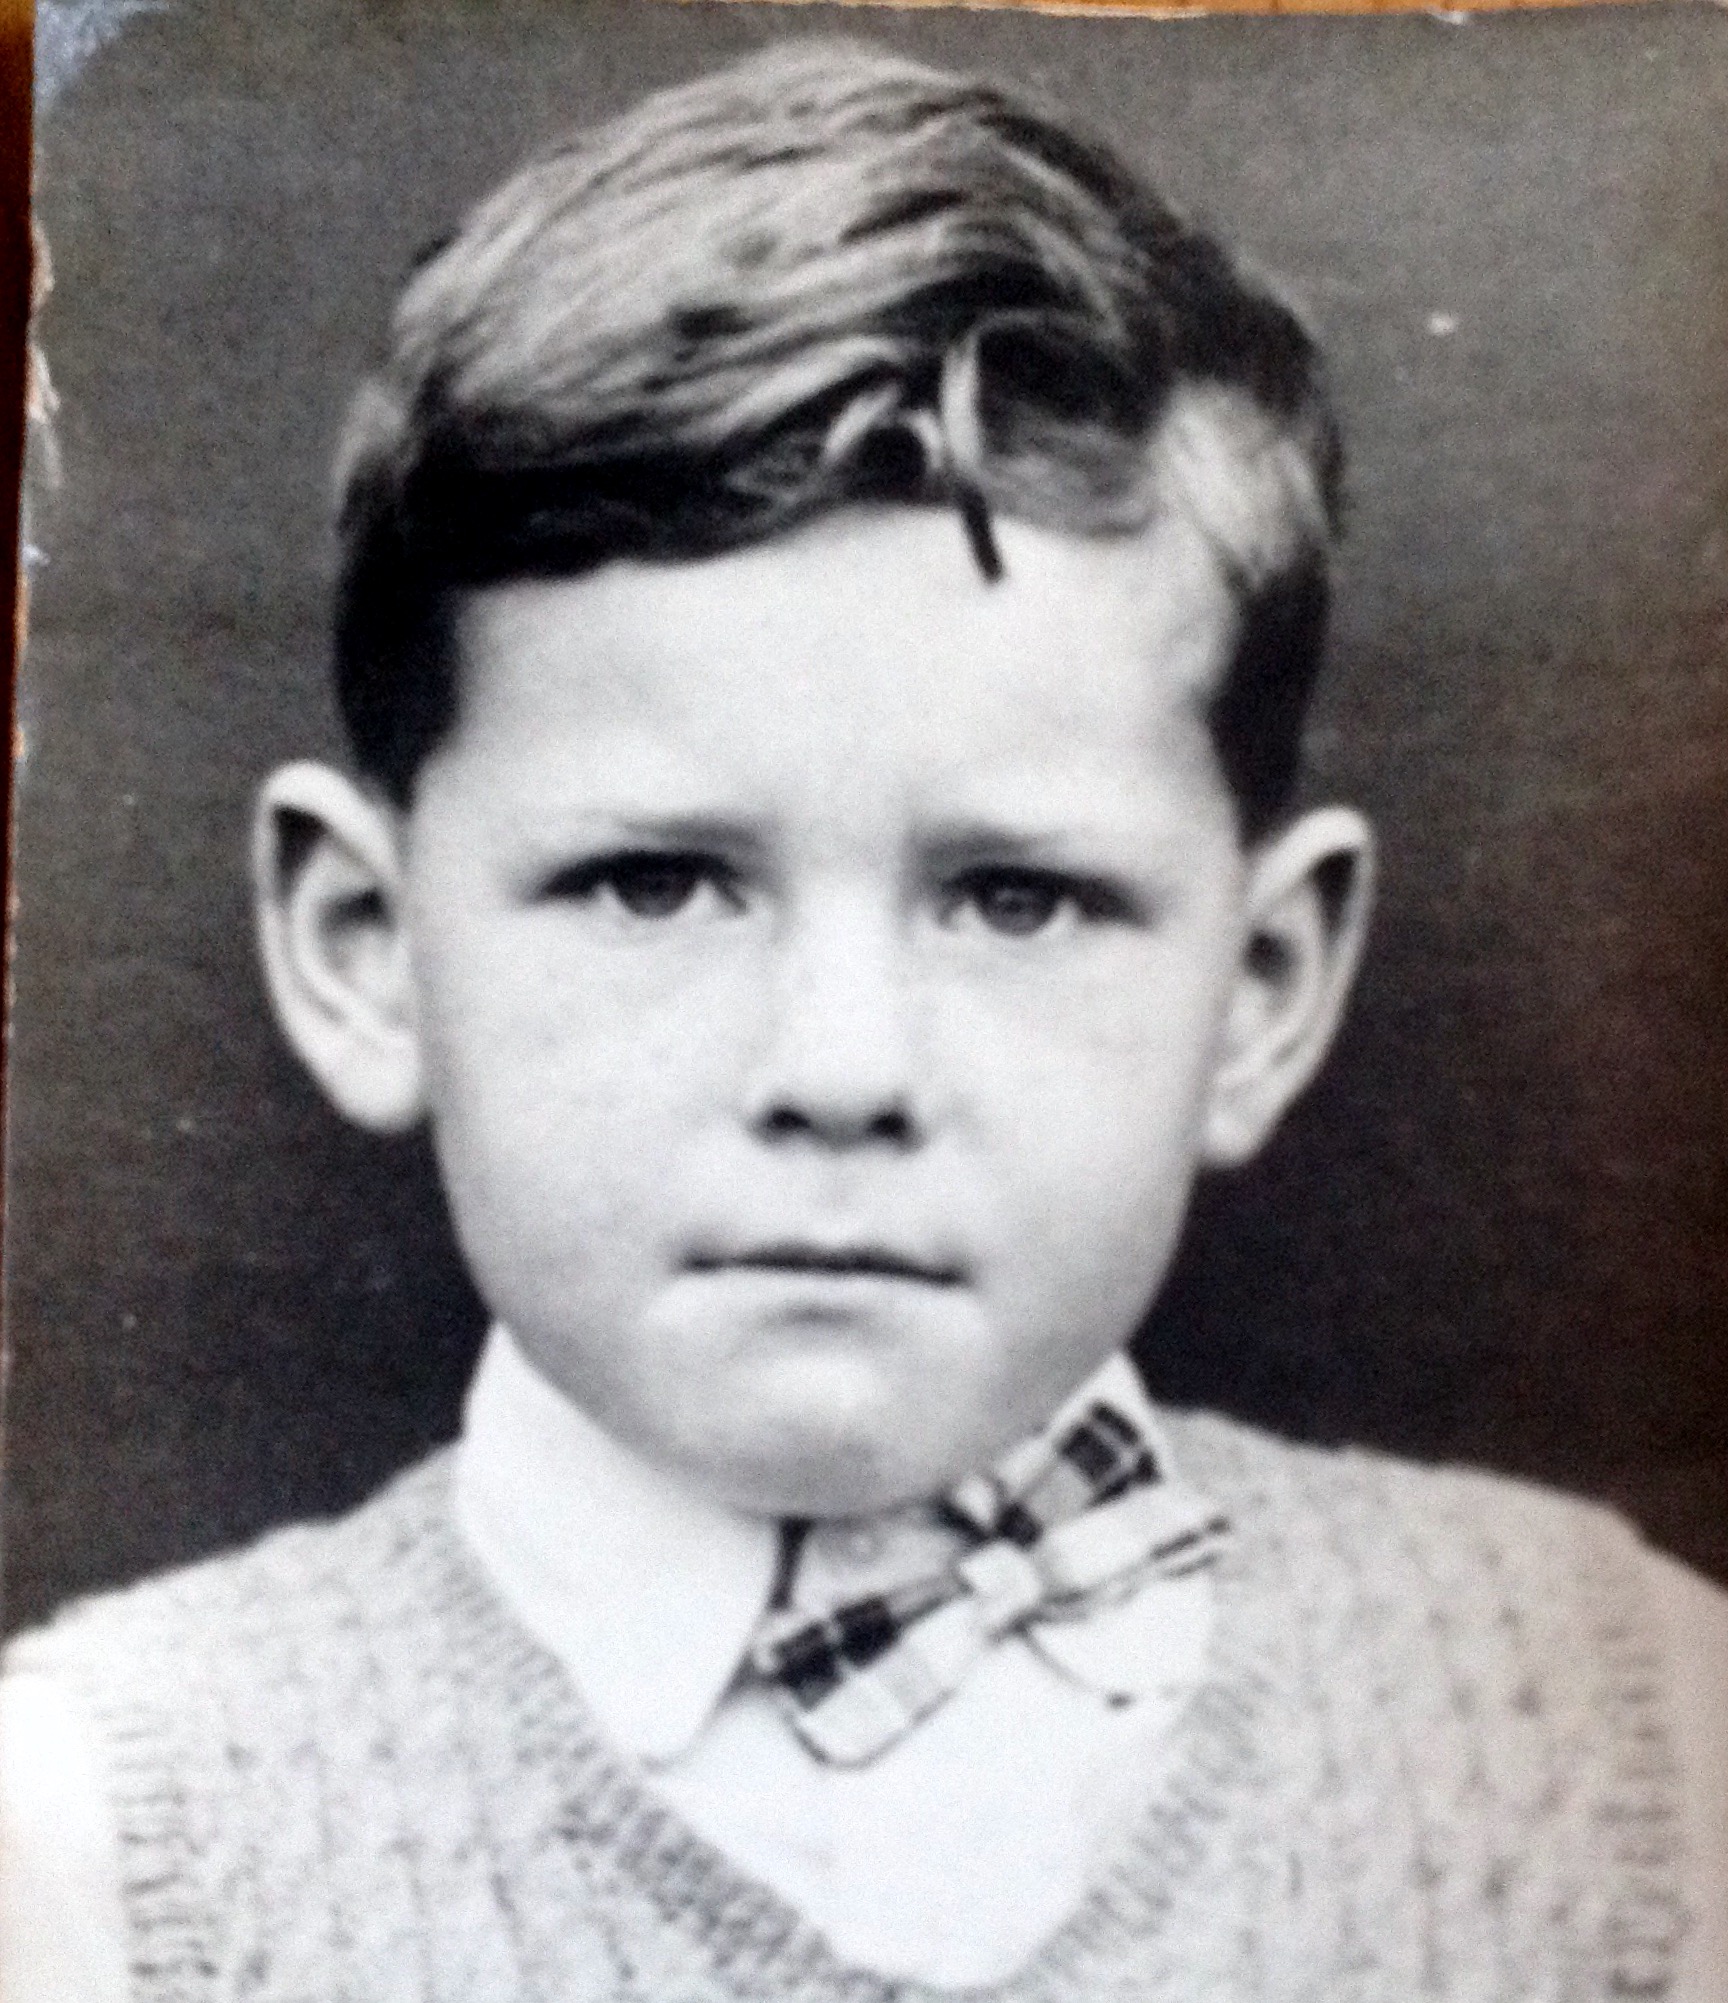 First school photo 1954